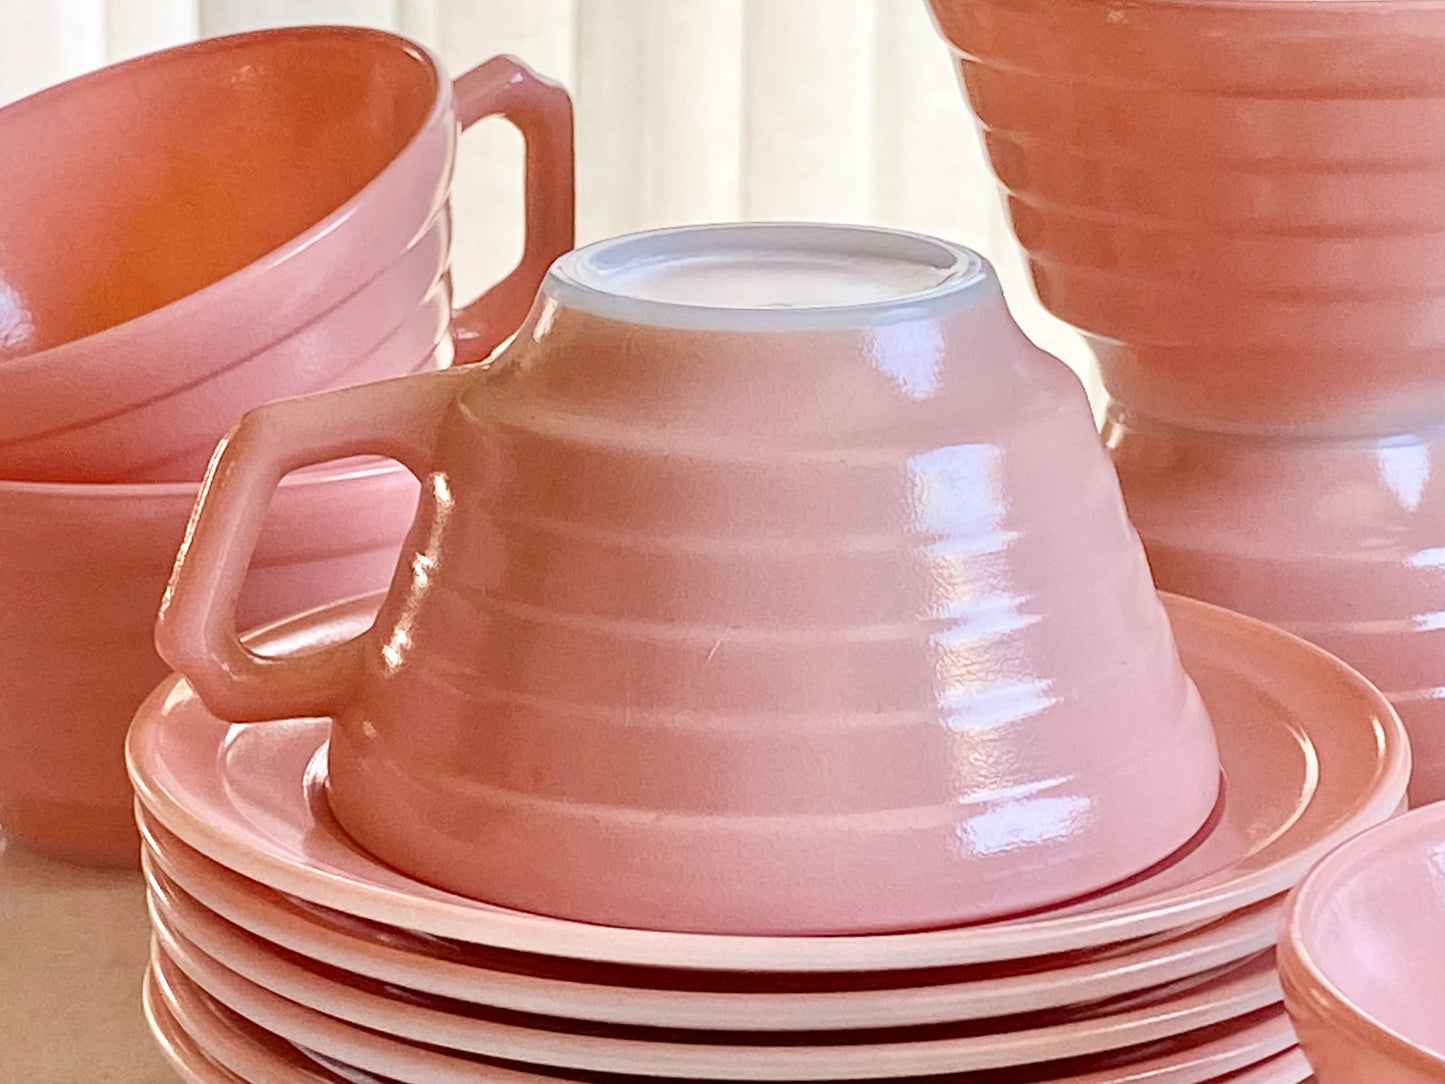 Vintage Hazel Atlas Moderntone Platonite Pastel Pink Cups and Saucers - 12 Sets Available